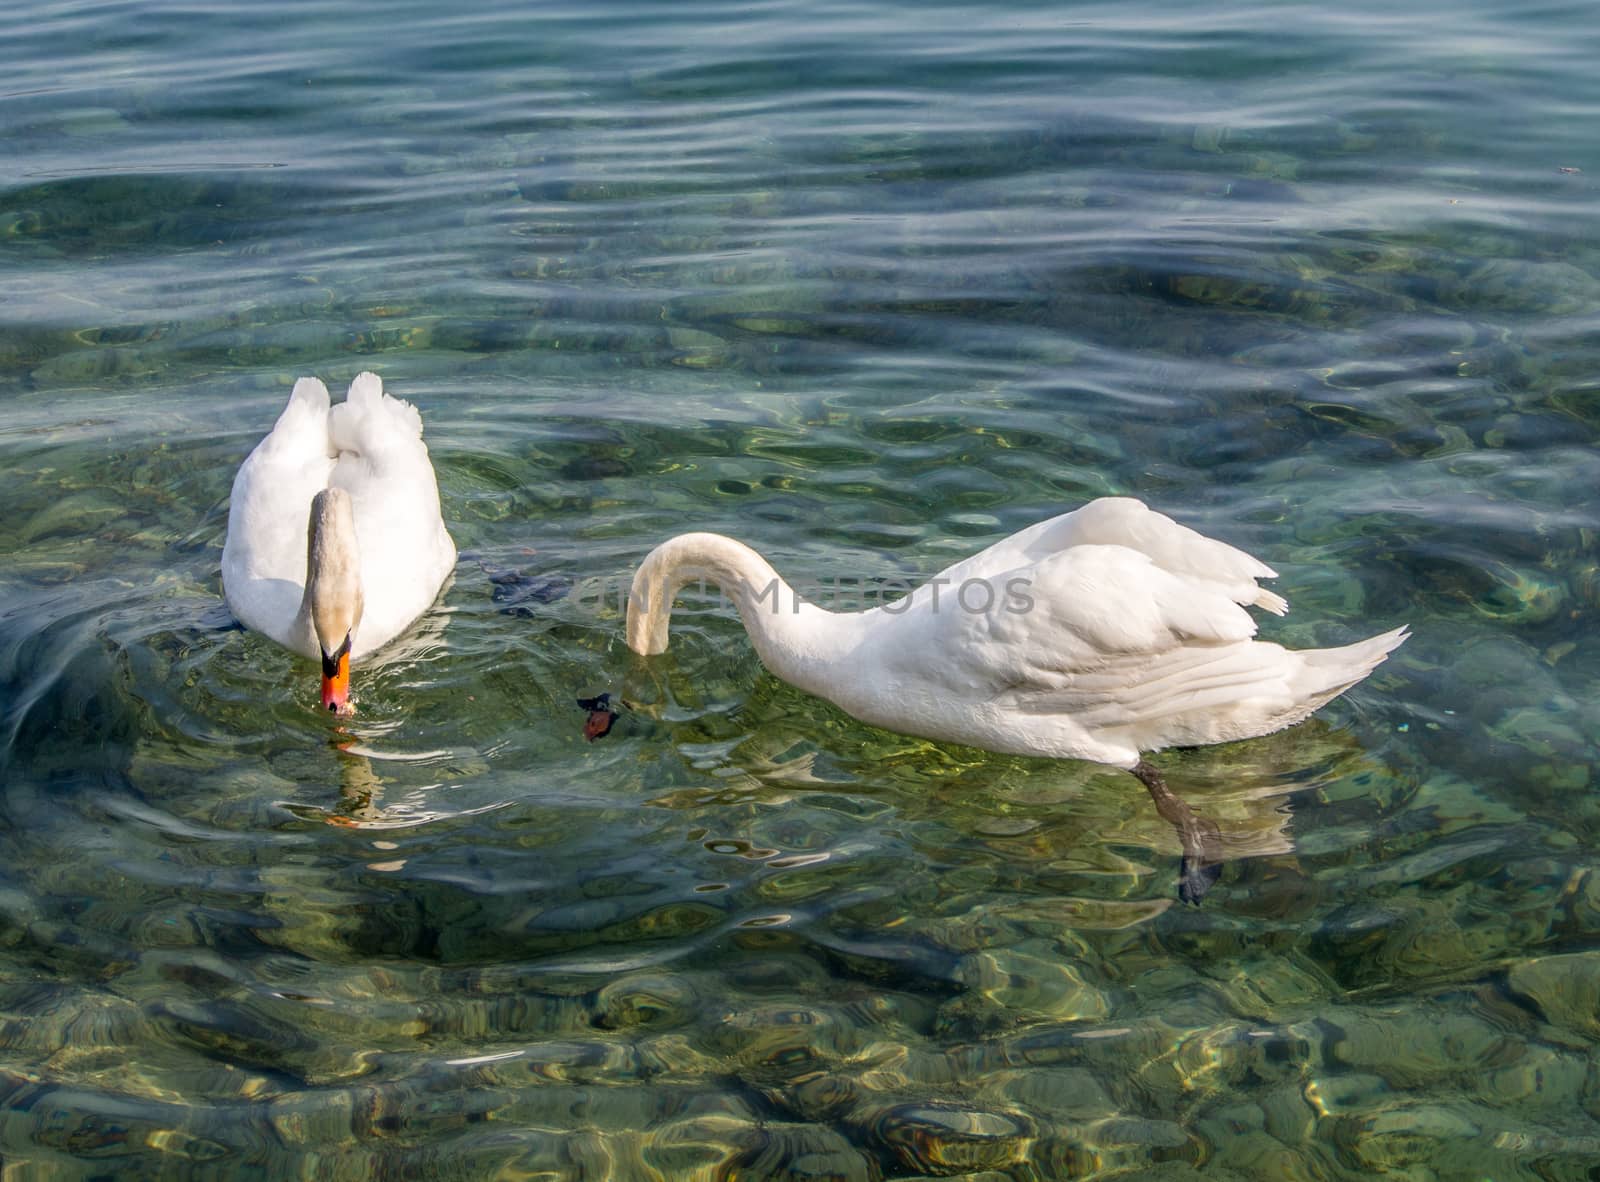 White Swans by danieldep